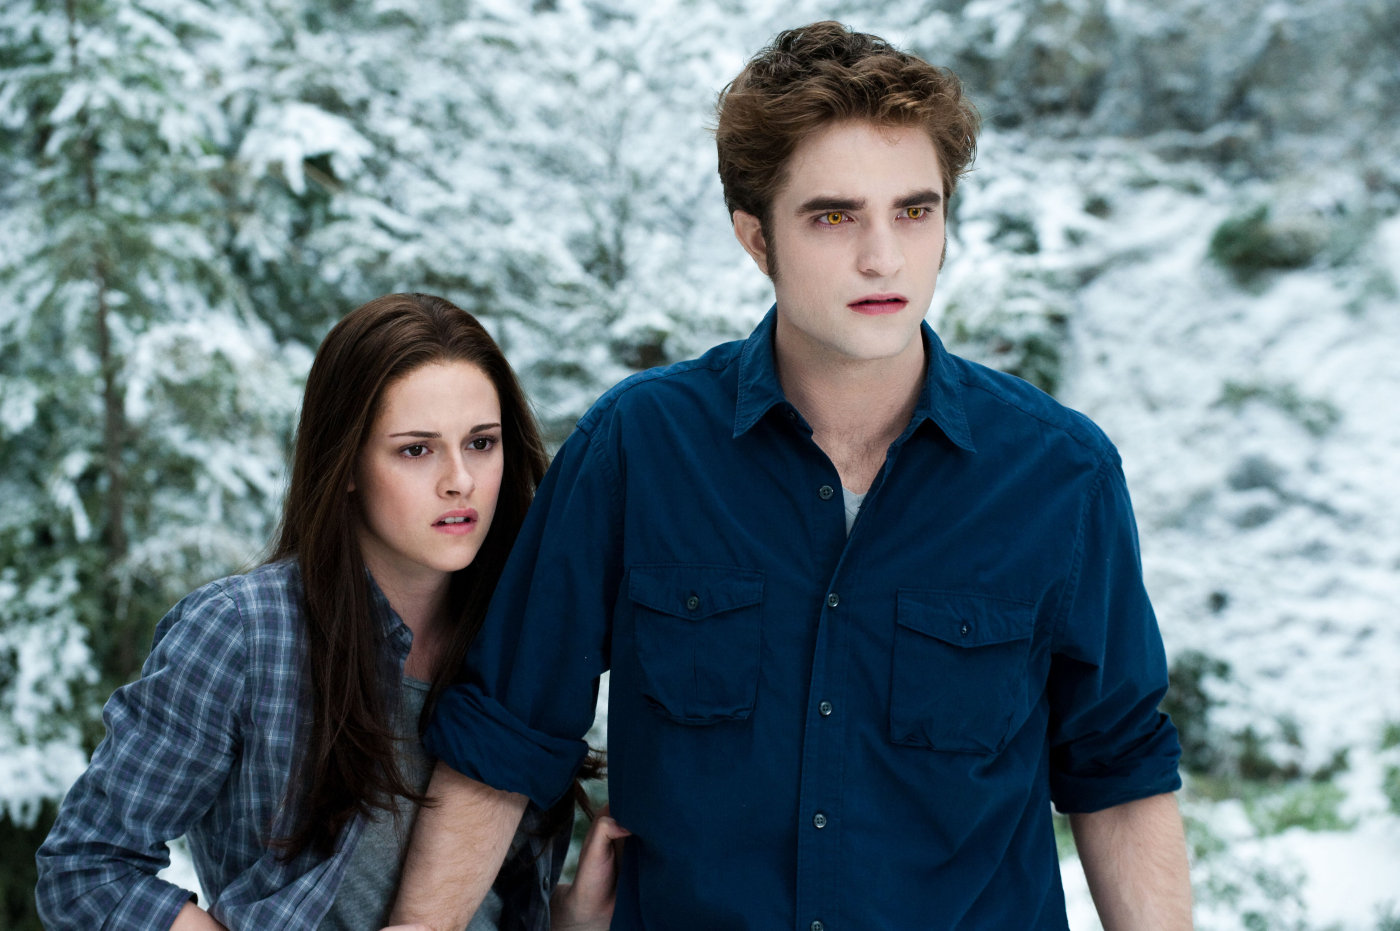 Robert Pattinson in The Twilight Saga: Eclipse